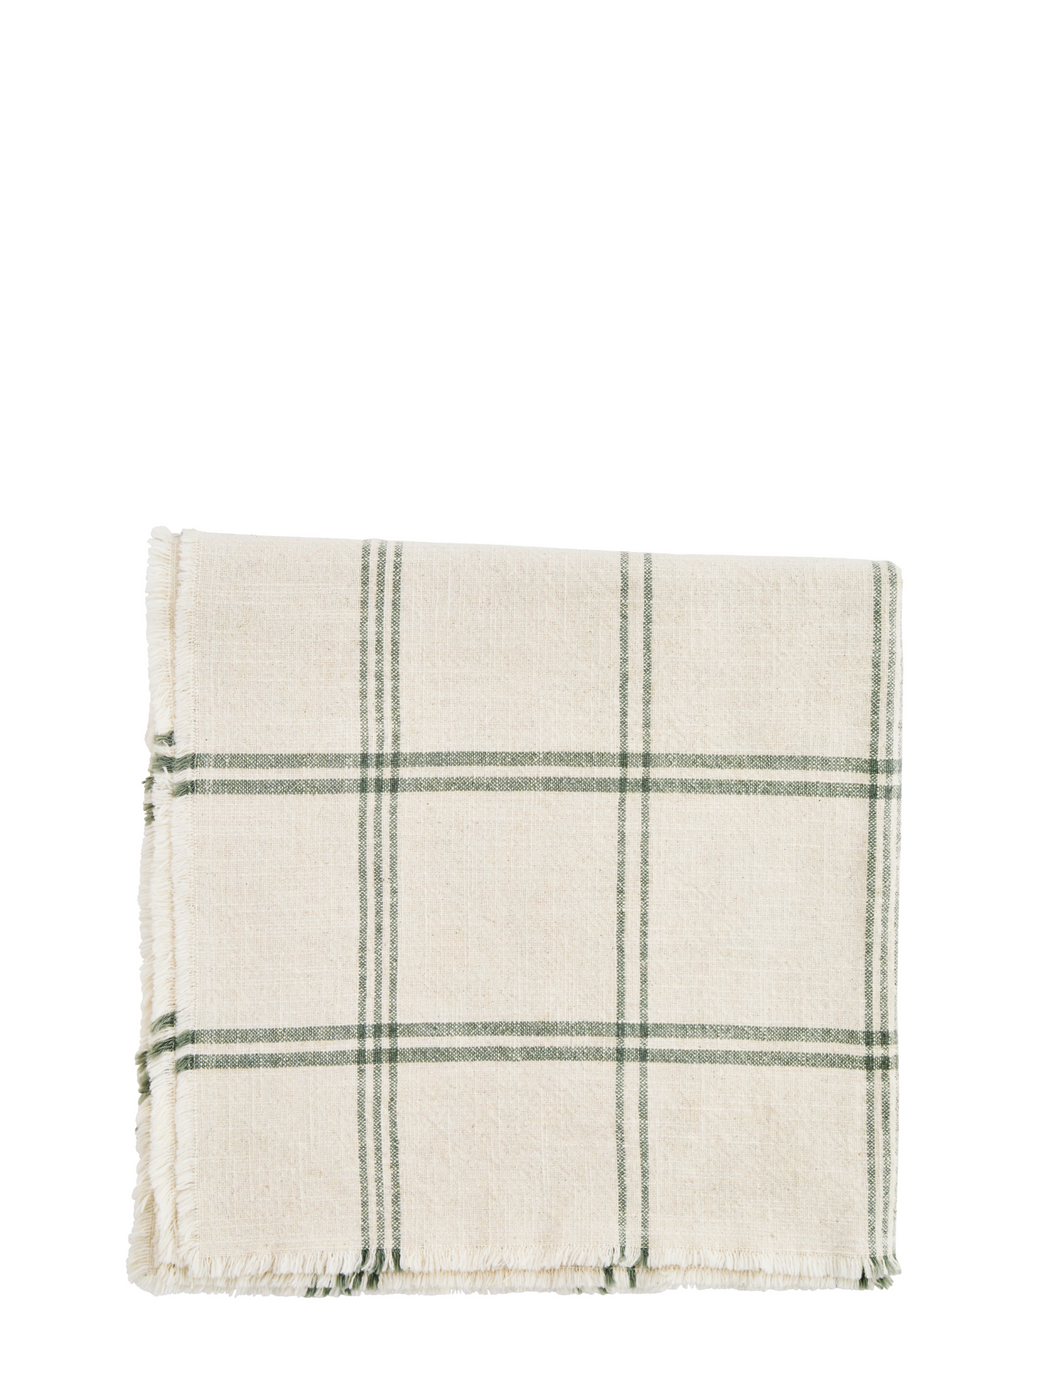 Green&ecru check table cloth 150x150cm